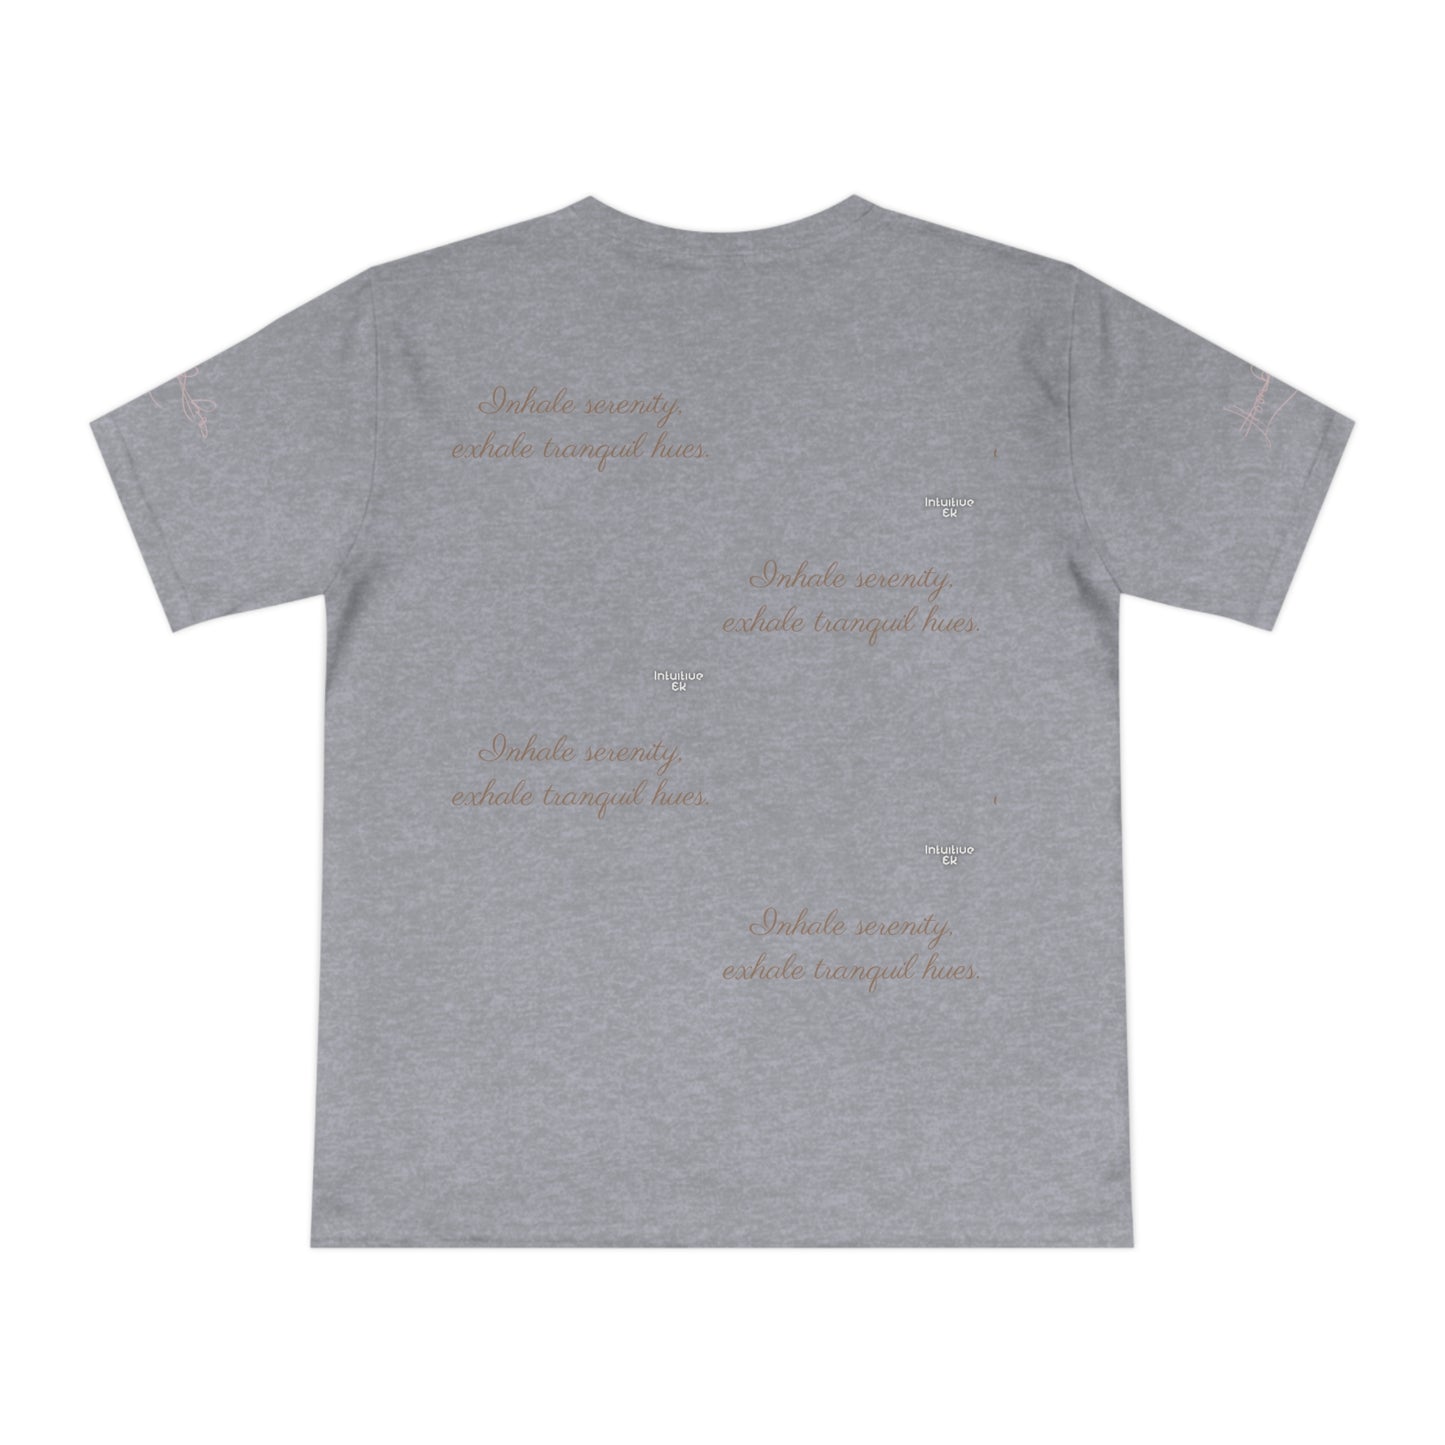 Pastel Peace: Tranquil Brush Stroke T-Shirt